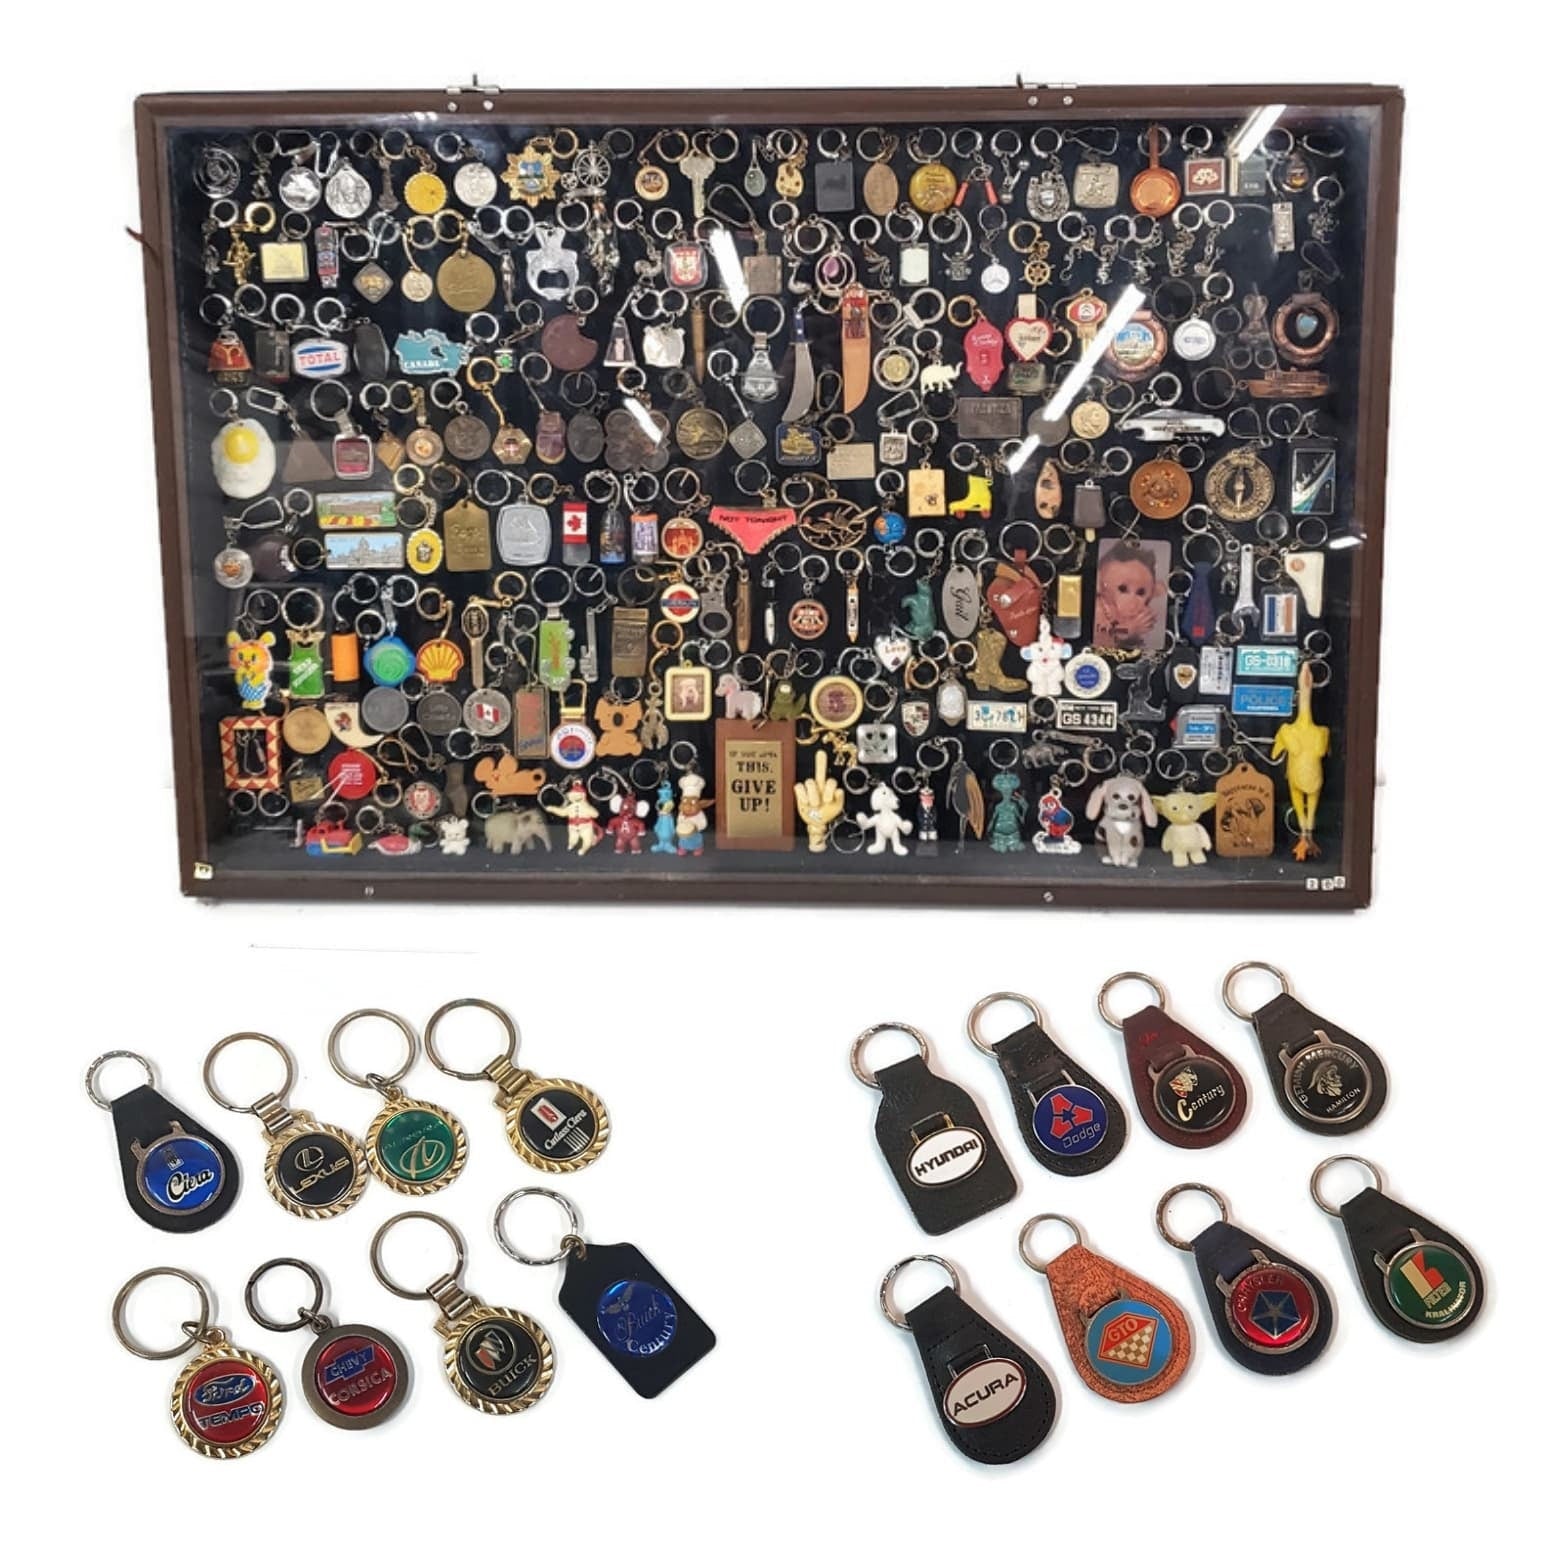 saab key chain keychain key fob keytag vintage automotove keychain gift collectible